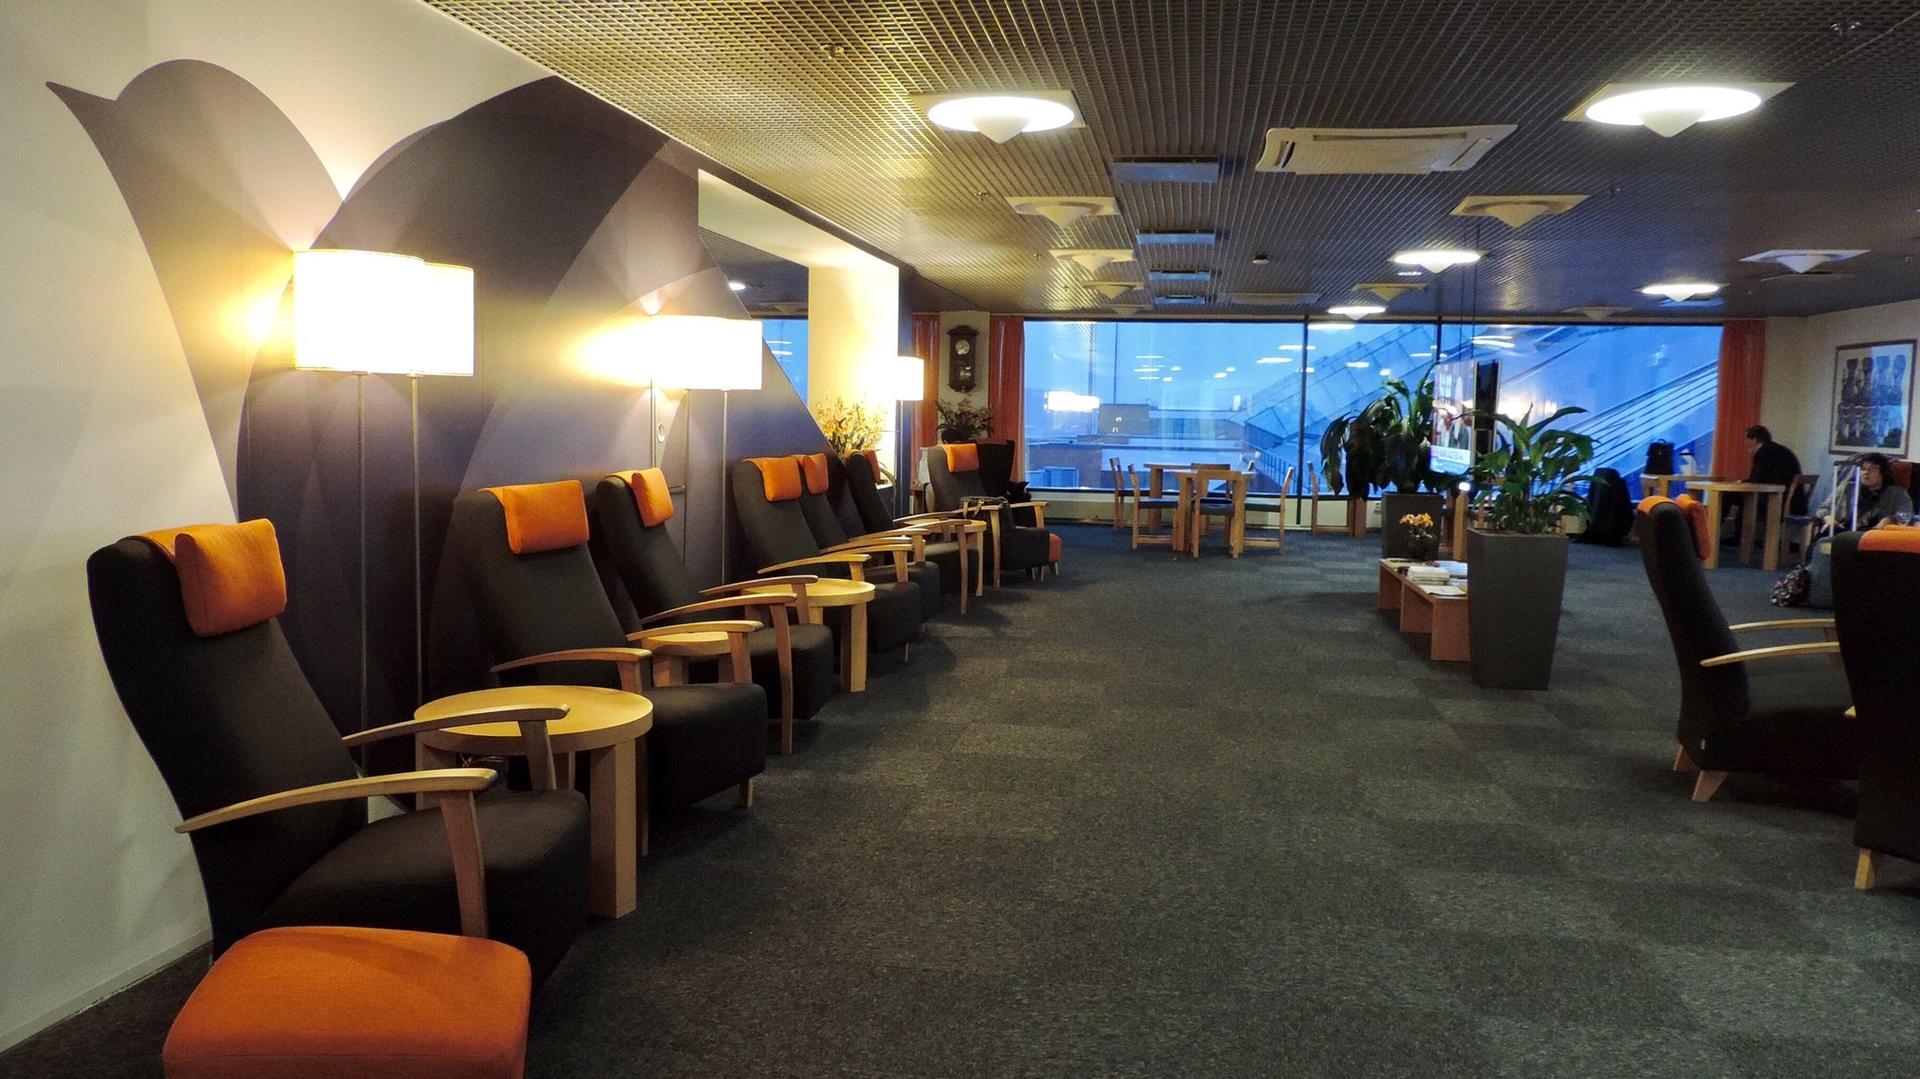 Tallinn Airport LHV Lounge image 15 of 20